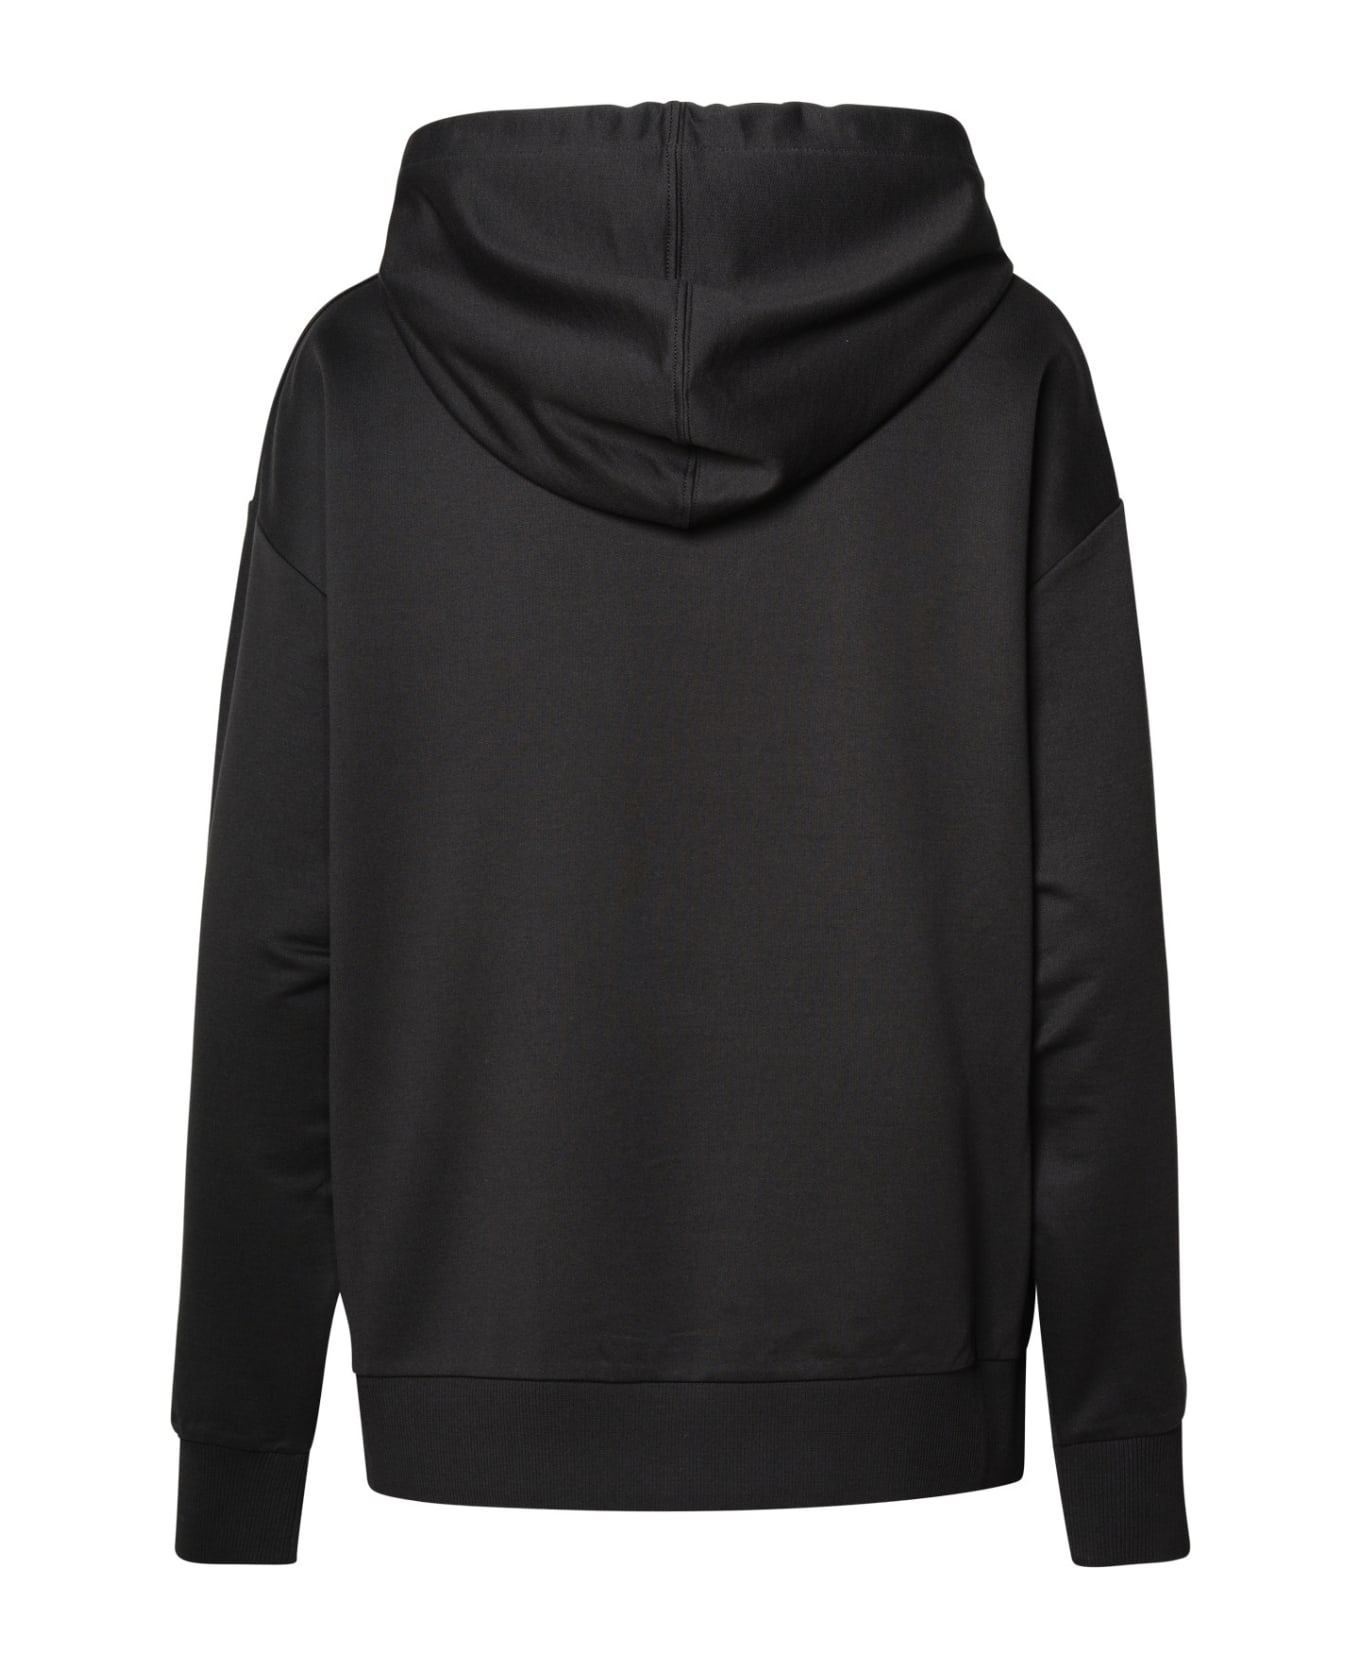 Moncler Black Cotton Sweatshirt - Black